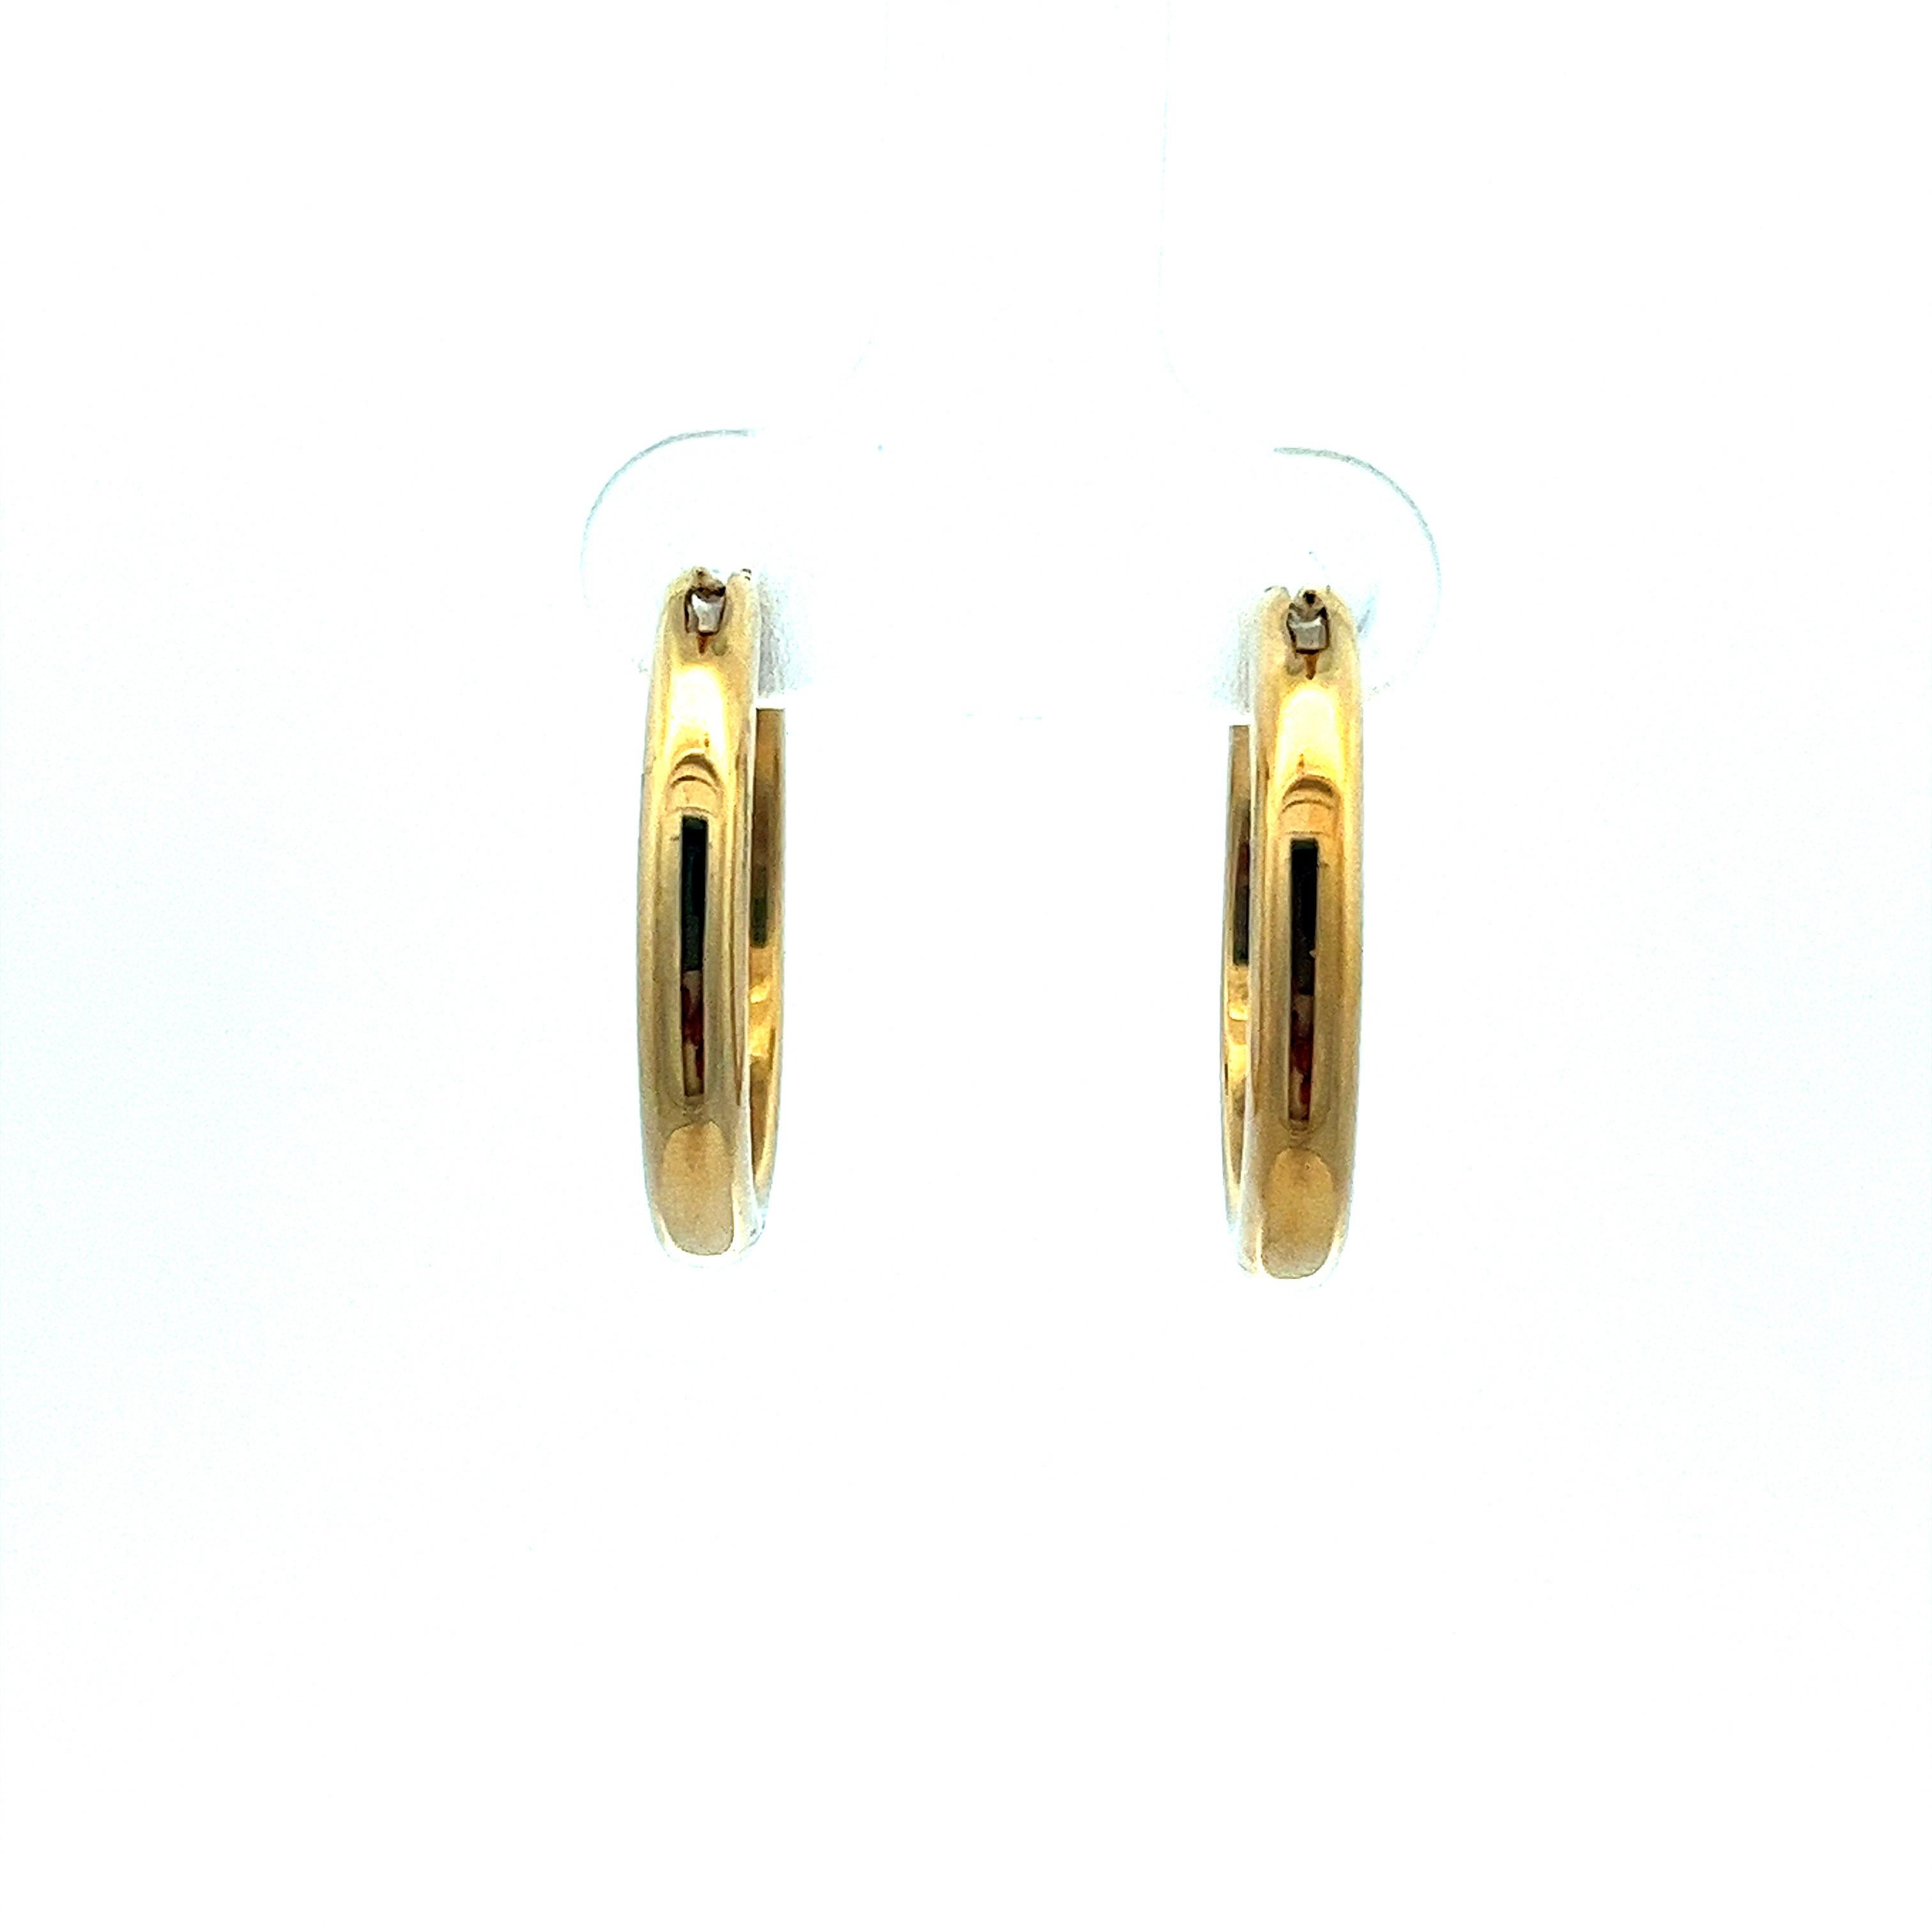 Modern Tiffany & Co. 18 Karat Square Cushion Hoop Earrings in Yellow Gold